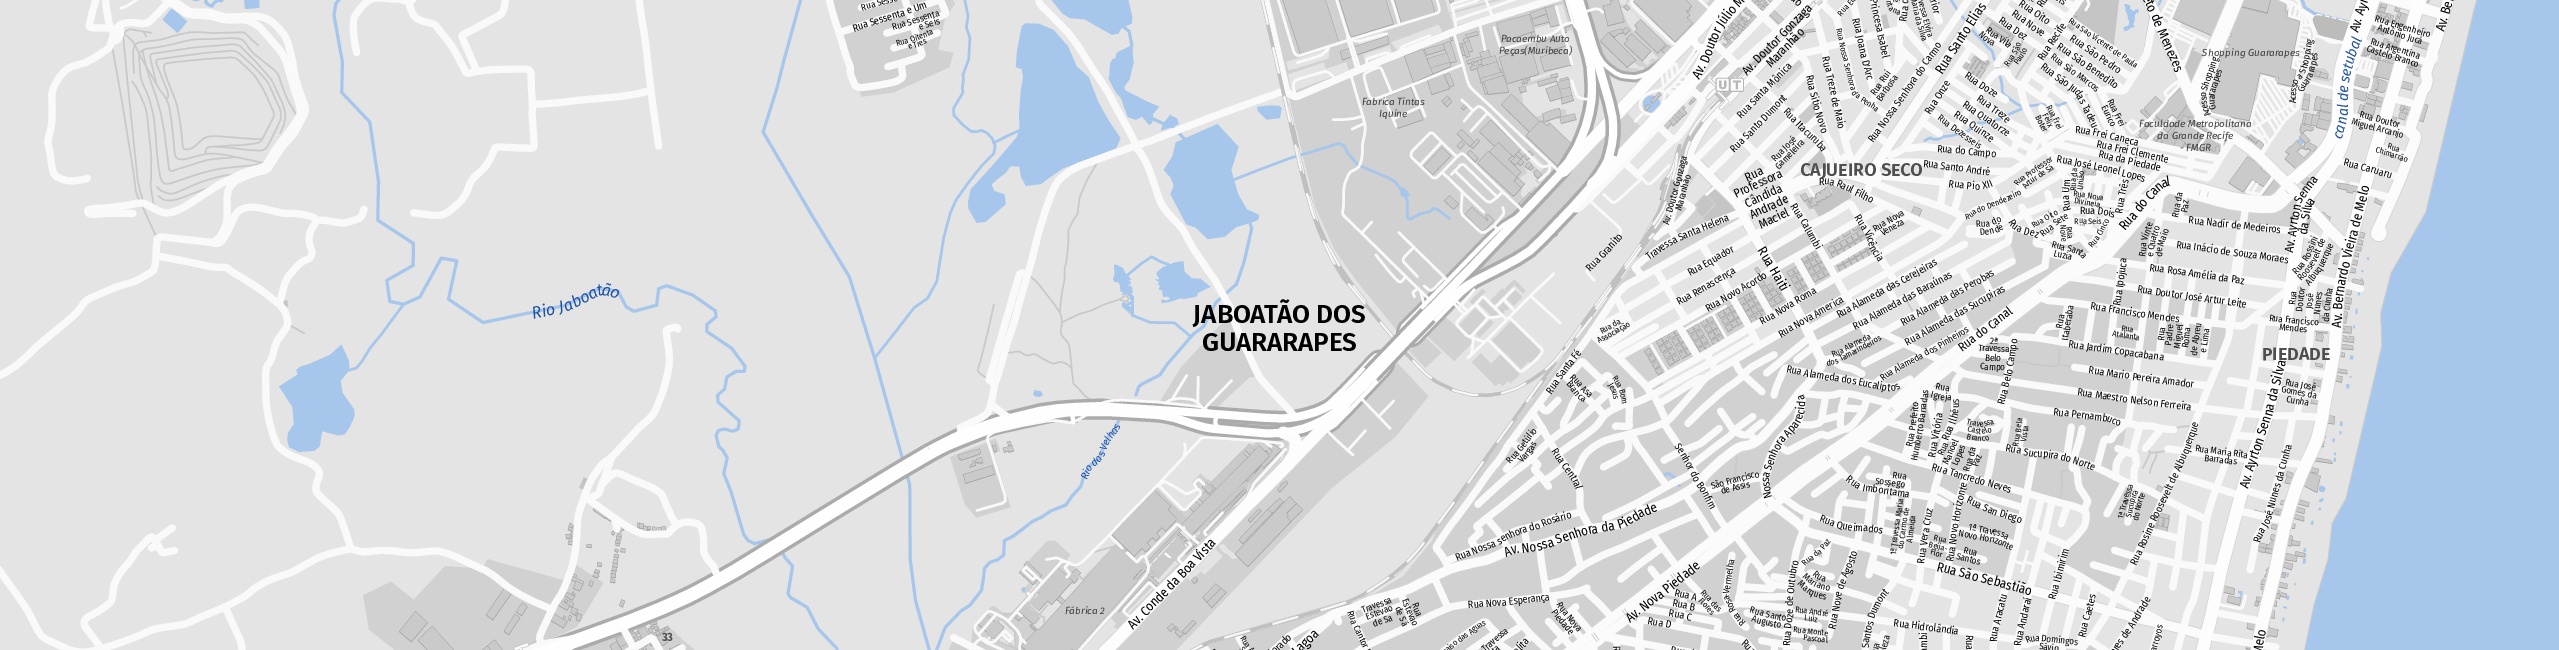 Stadtplan Jaboatão dos Guararapes zum Downloaden.